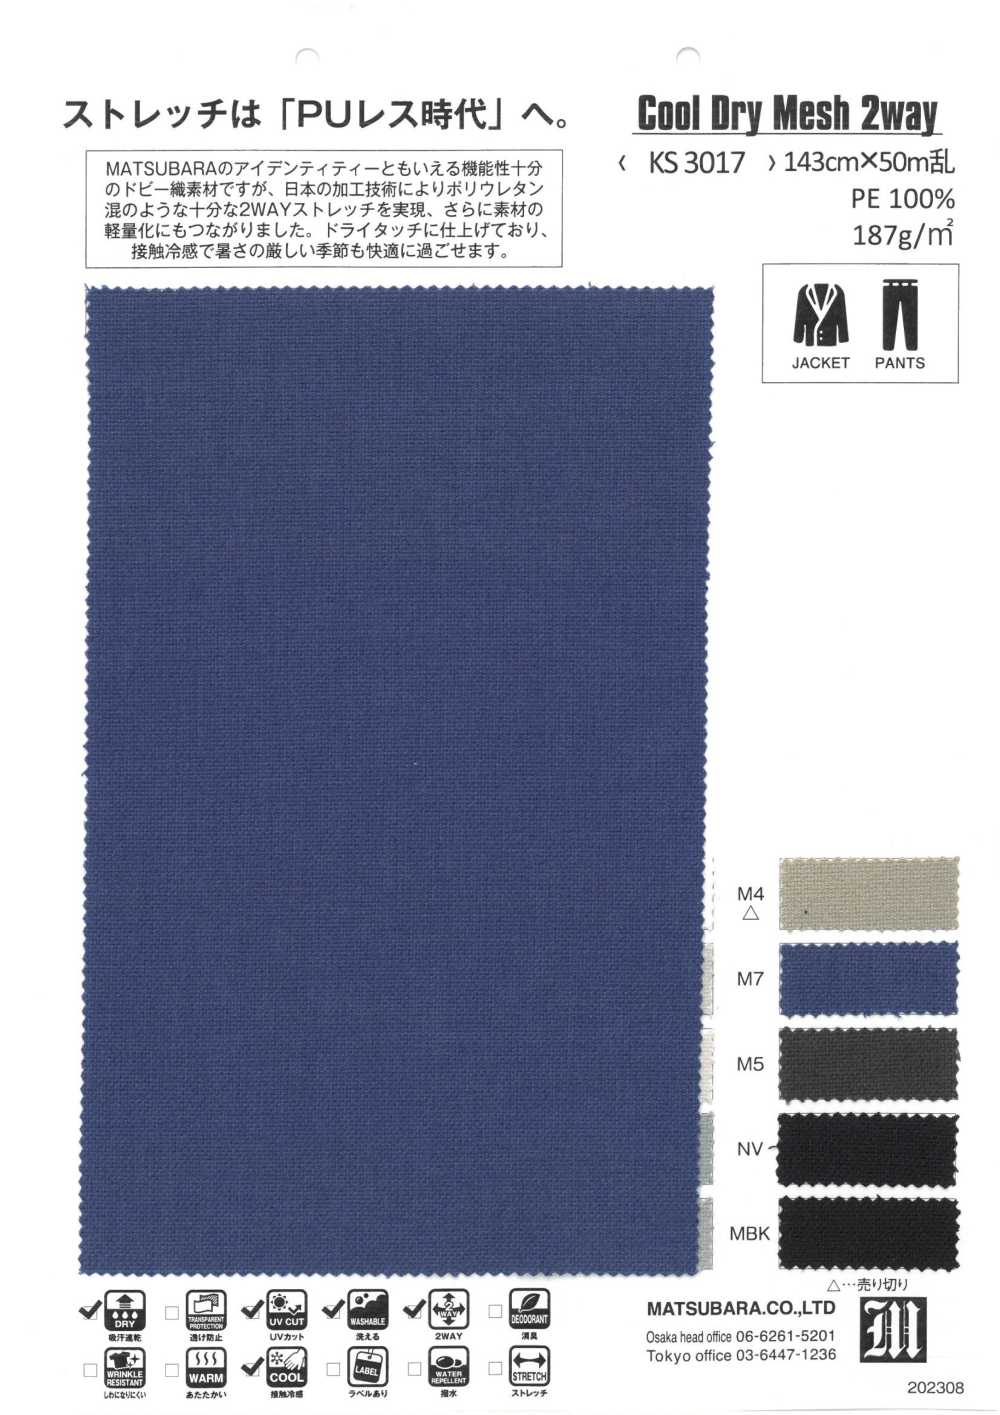 KS3017 COOL DRY MESH 2WAY[Textile / Fabric] Matsubara